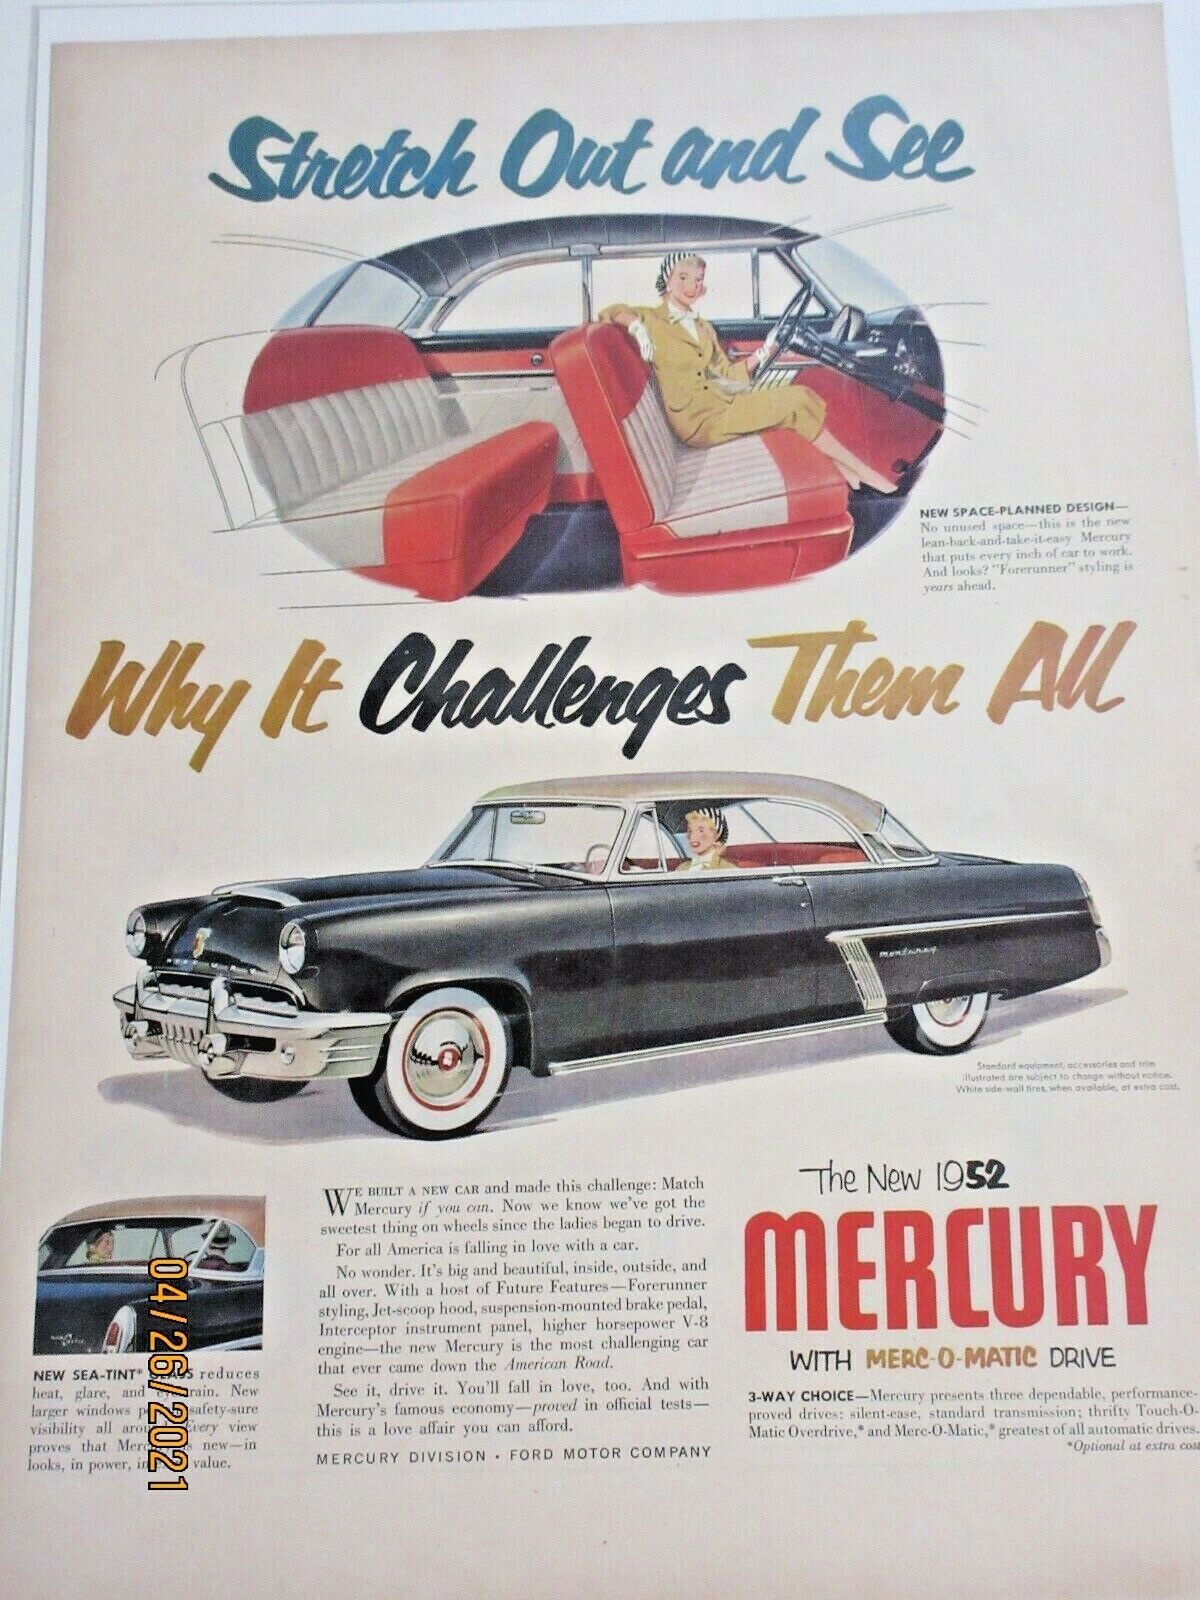 1952 Magazine ad for Mercury - \'52 Monterey, Space-planned design, Merc-o-matic